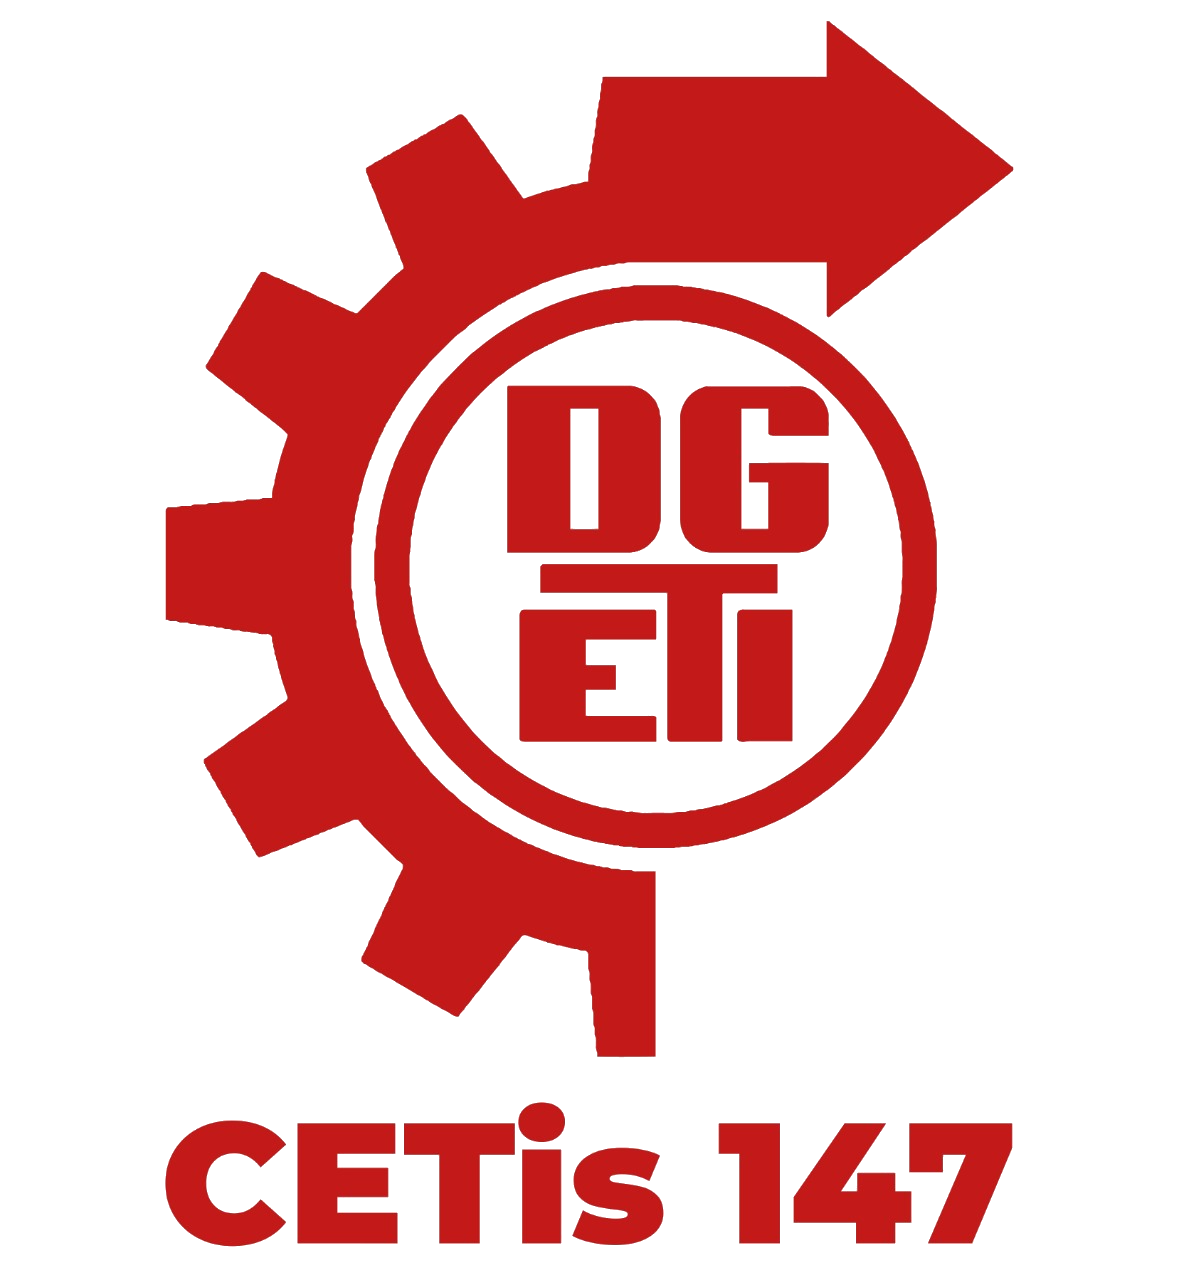 CETis 147